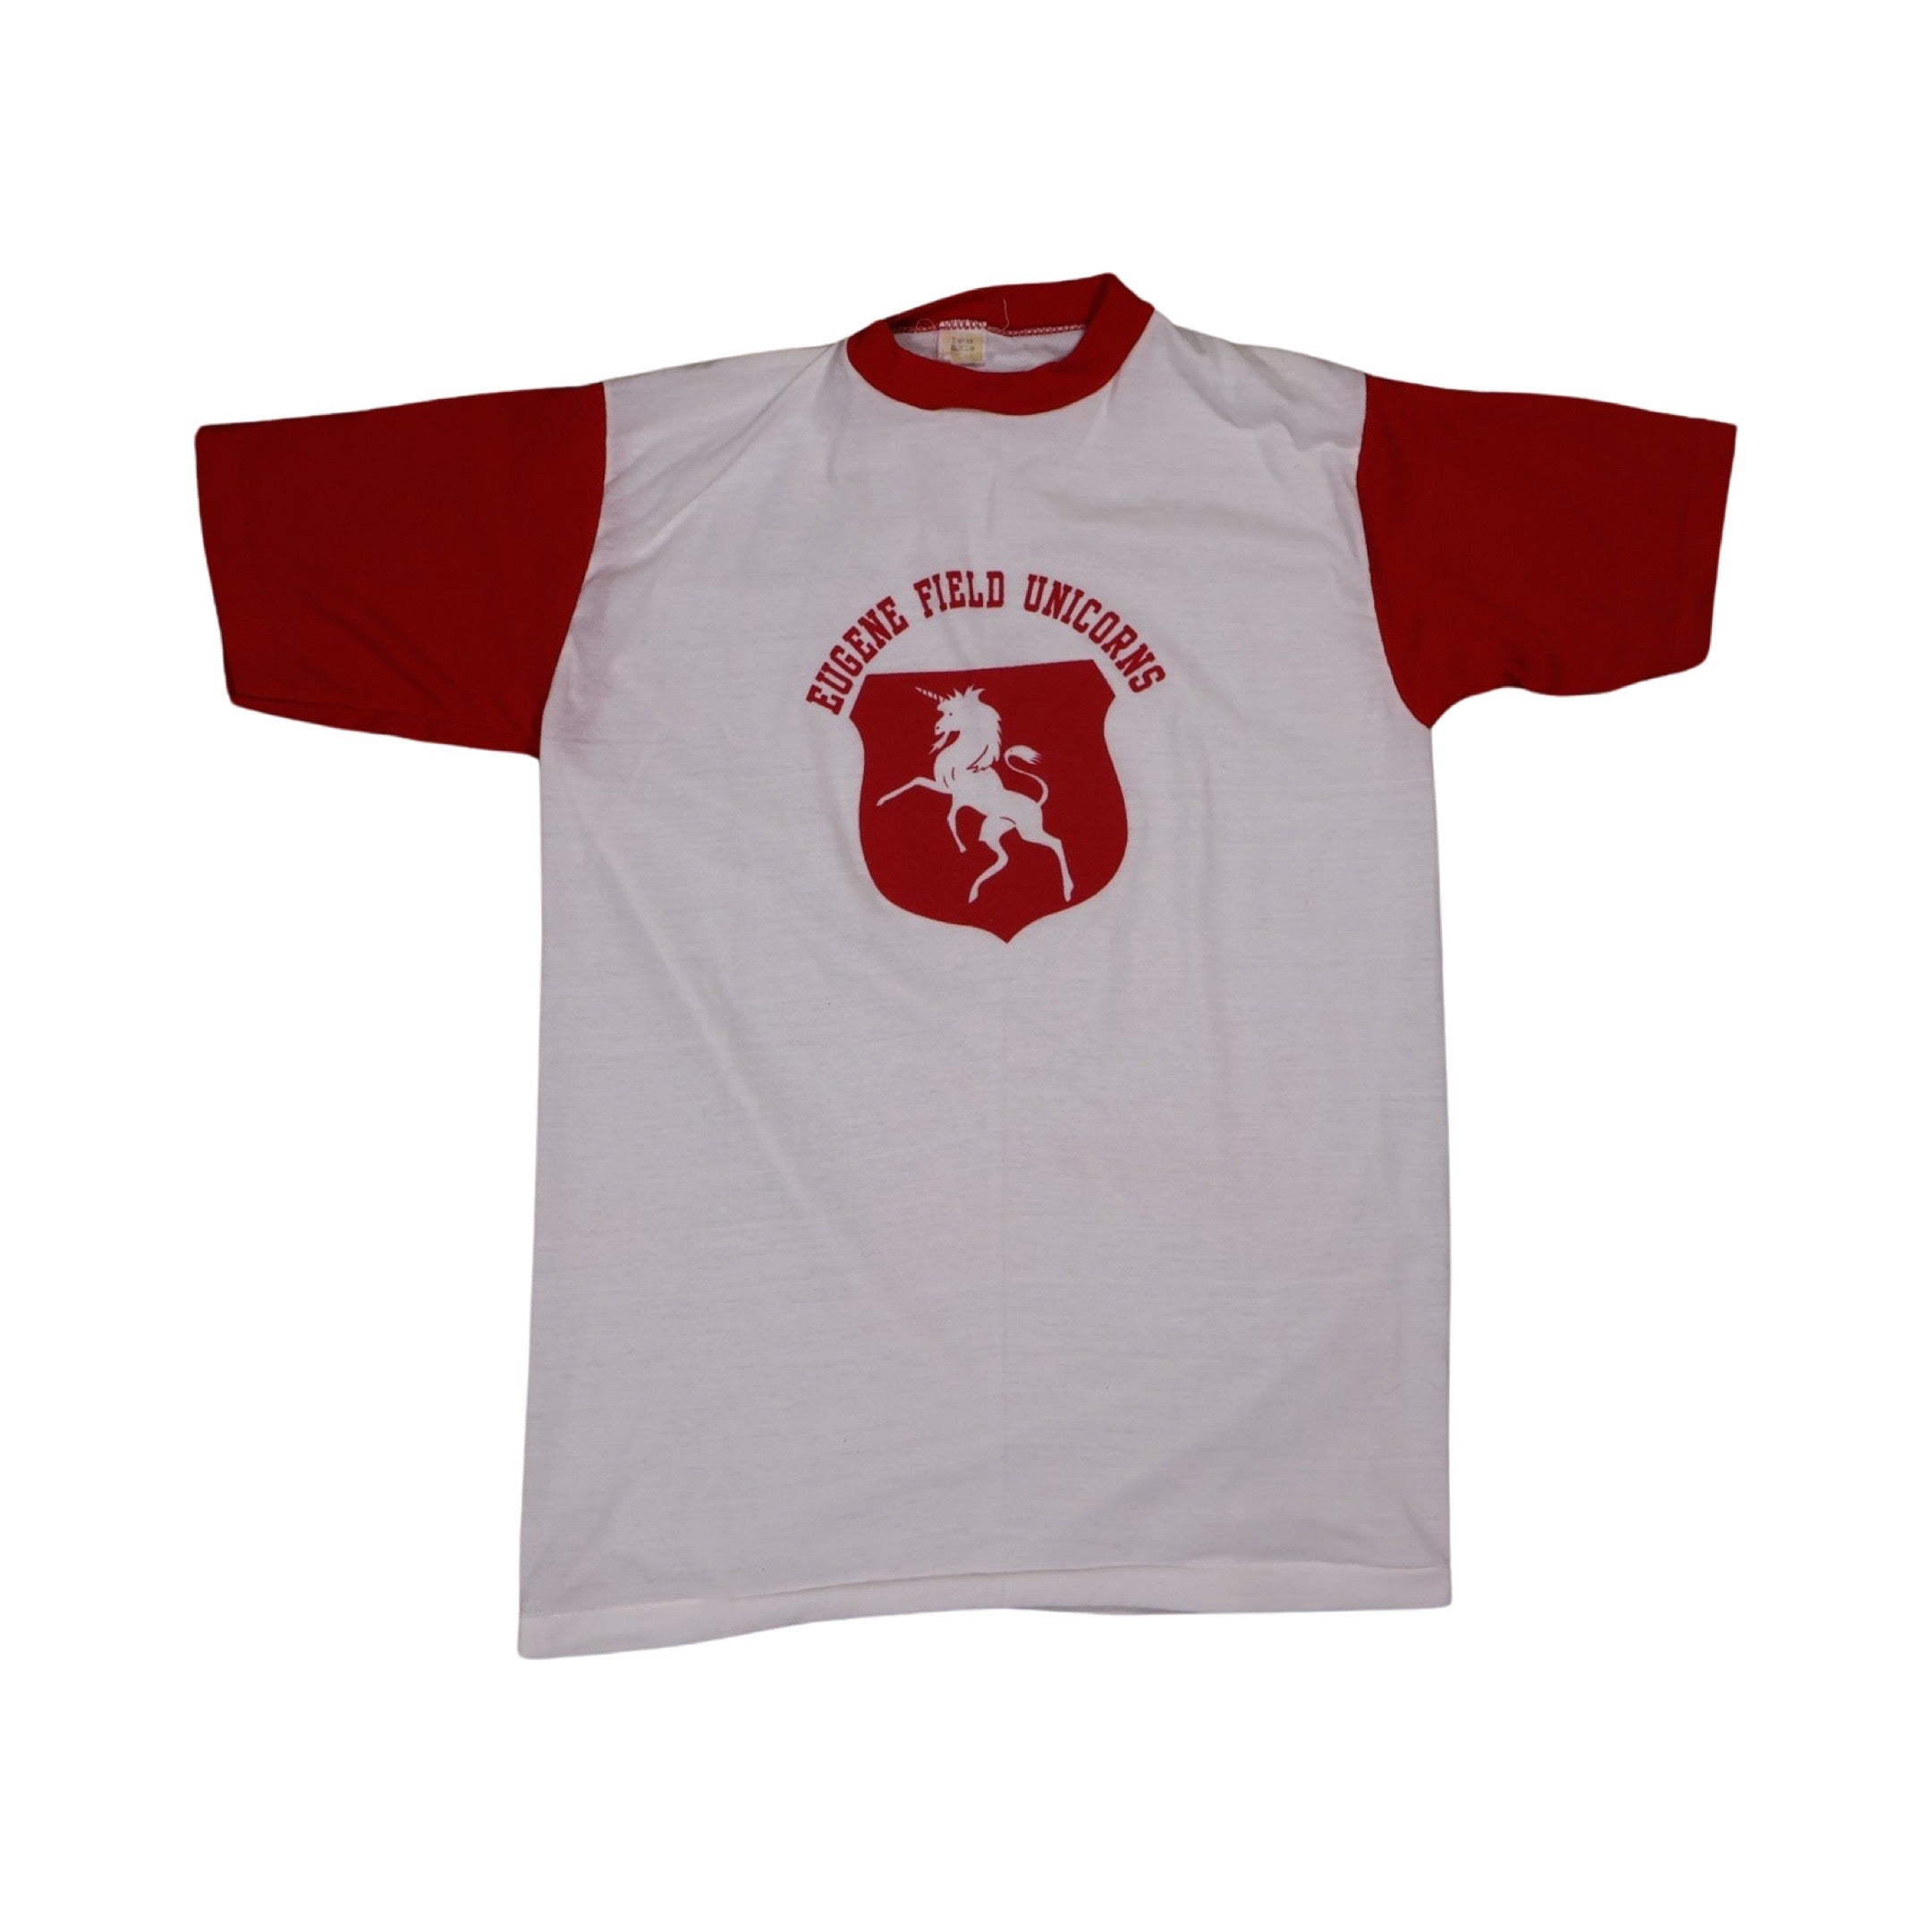 Eugene Field Unicorns 80s T-Shirt Essential (Large)